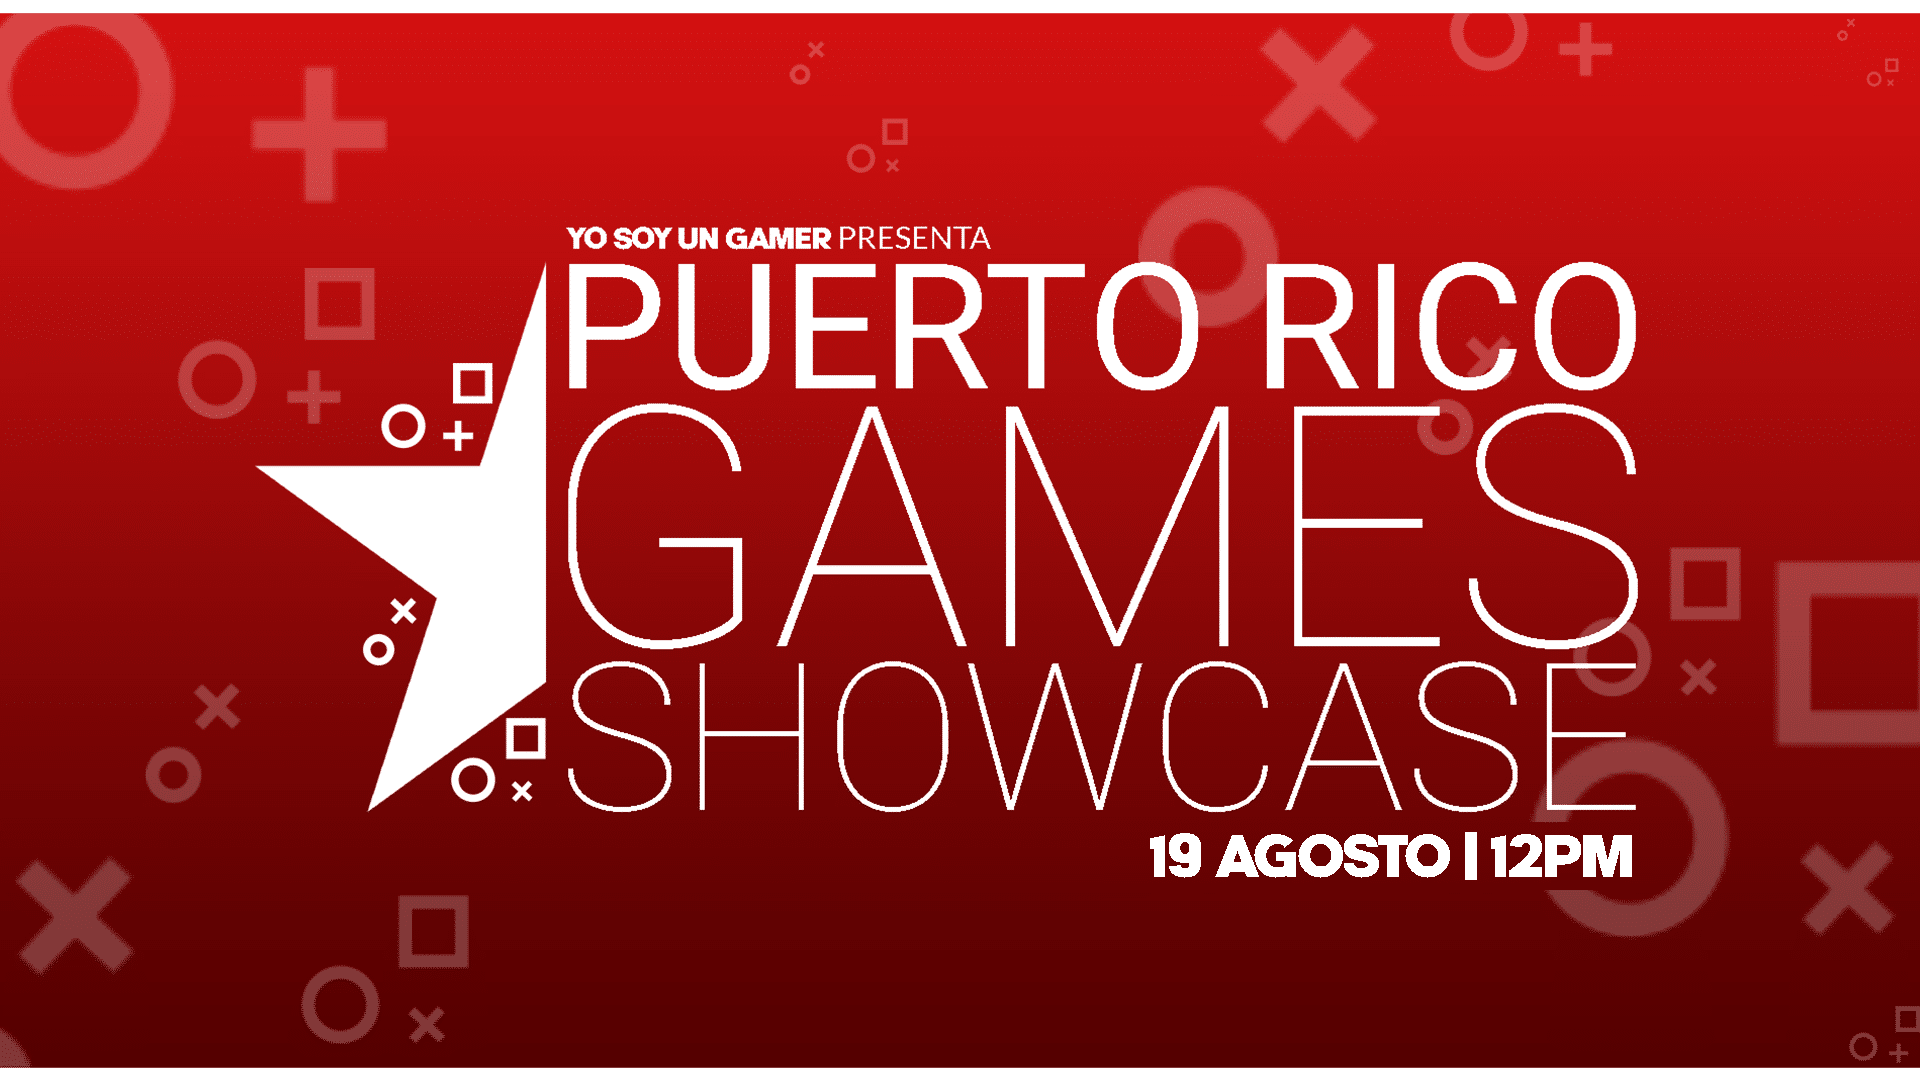 Puerto Rico Games Showcase